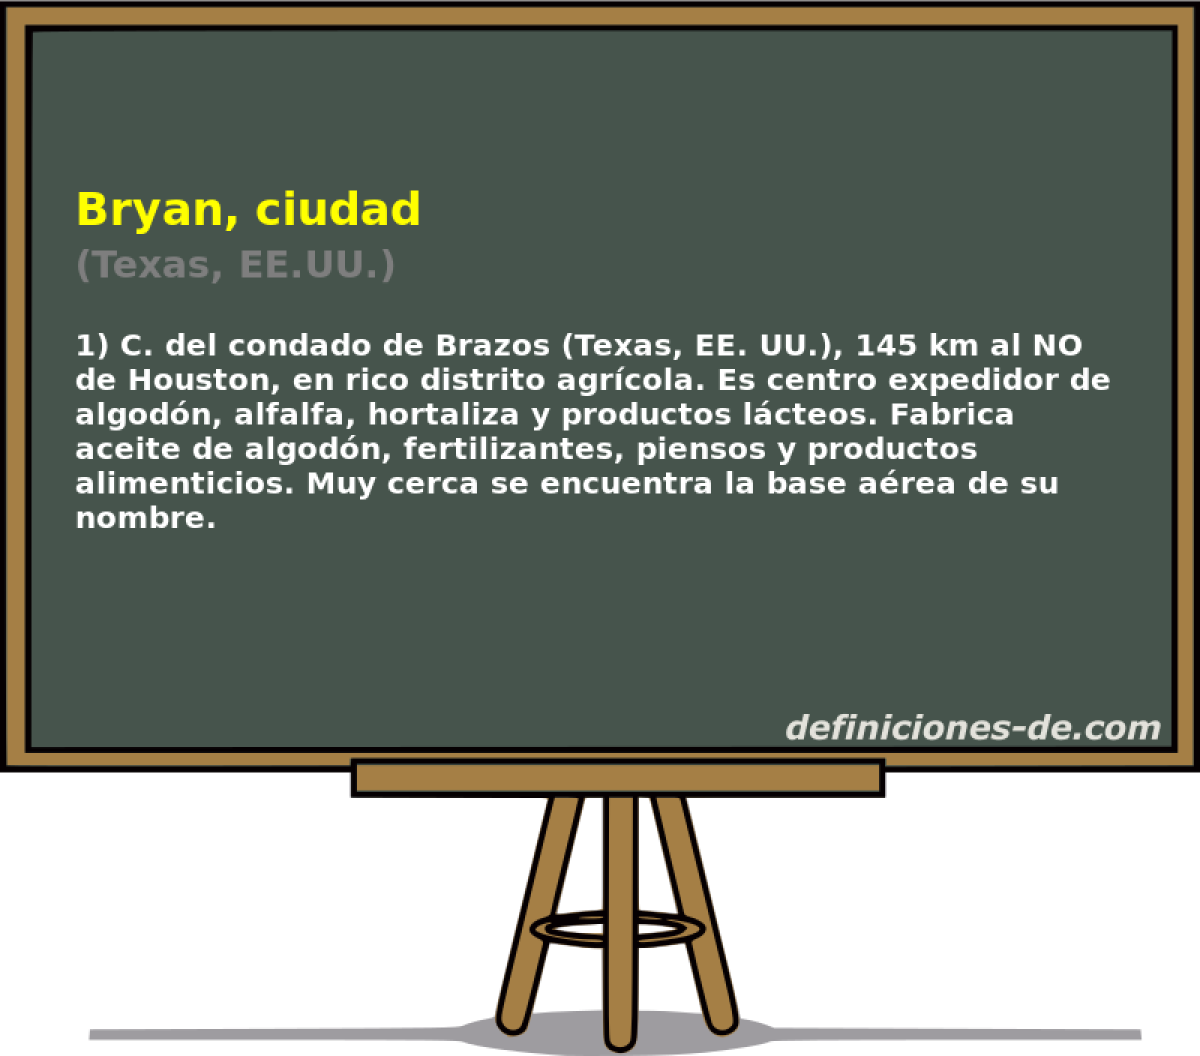 Bryan, ciudad (Texas, EE.UU.)